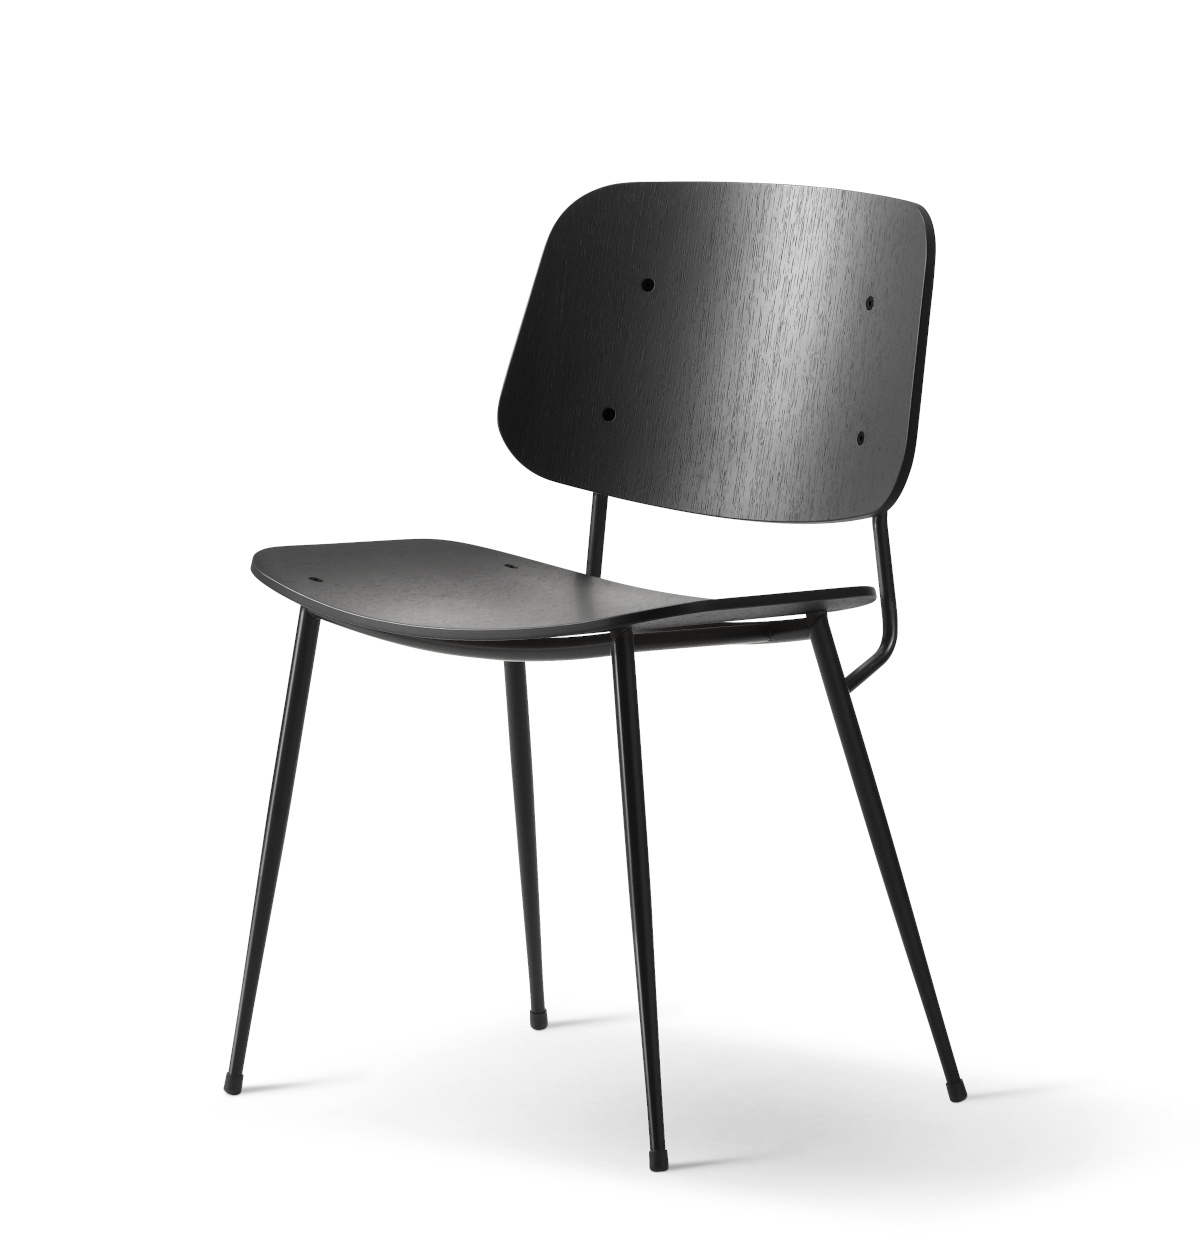 Søborg Metal Base Stuhl, schwarz / eiche schwarz lackiert